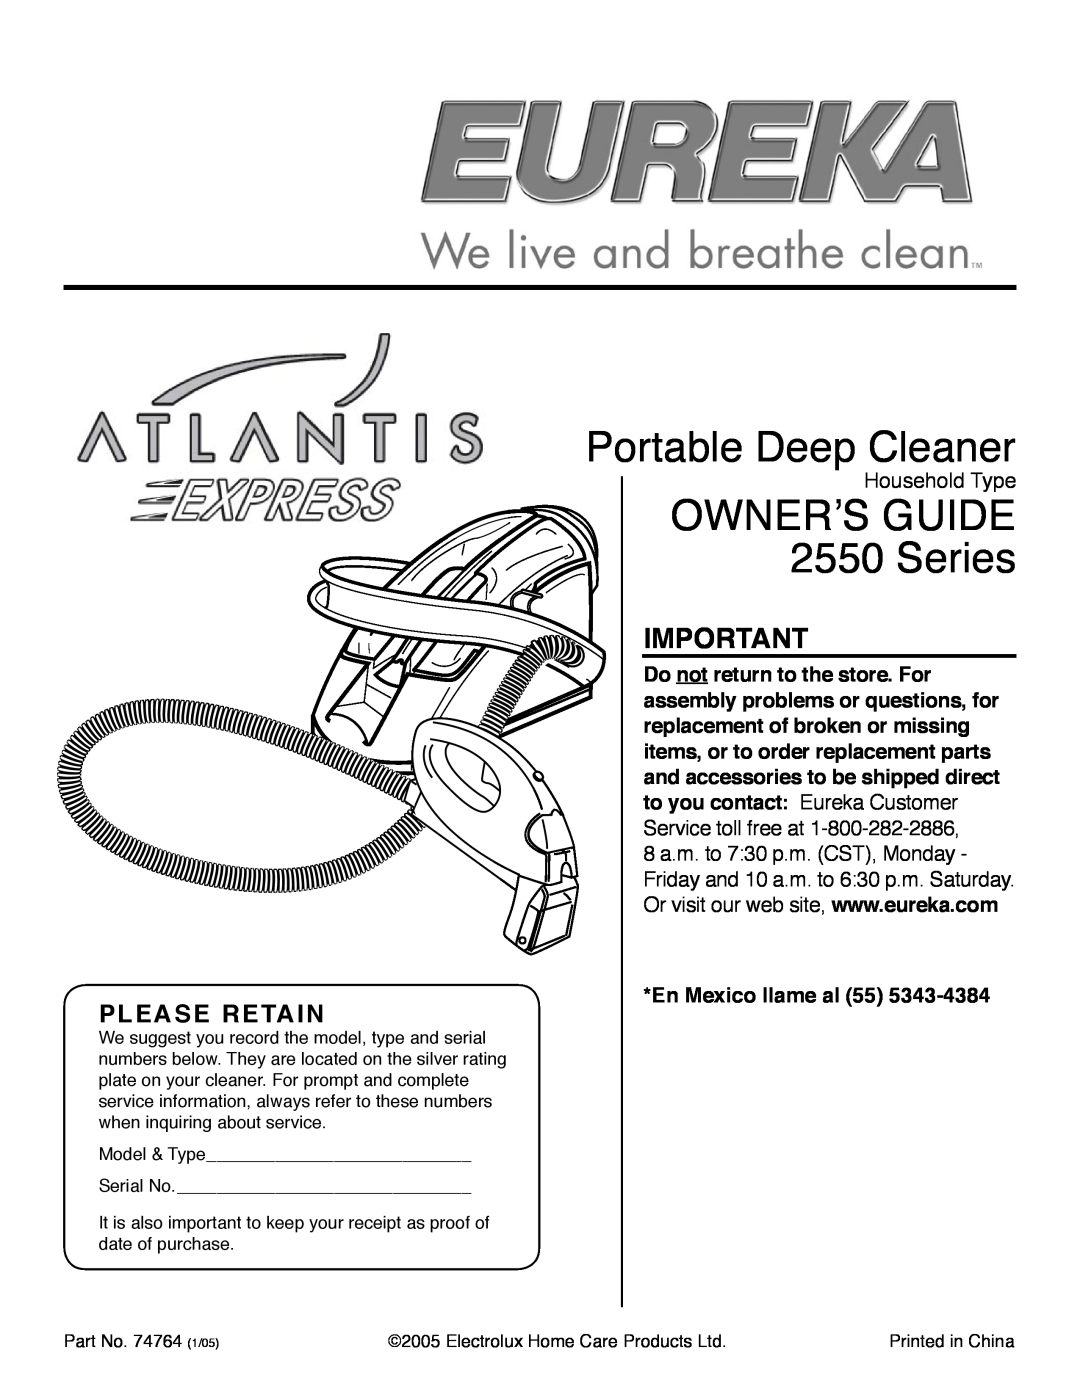 Eureka manual Please Retain, En Mexico llame al 55, Portable Deep Cleaner, OWNERʼS GUIDE 2550 Series, Household Type 